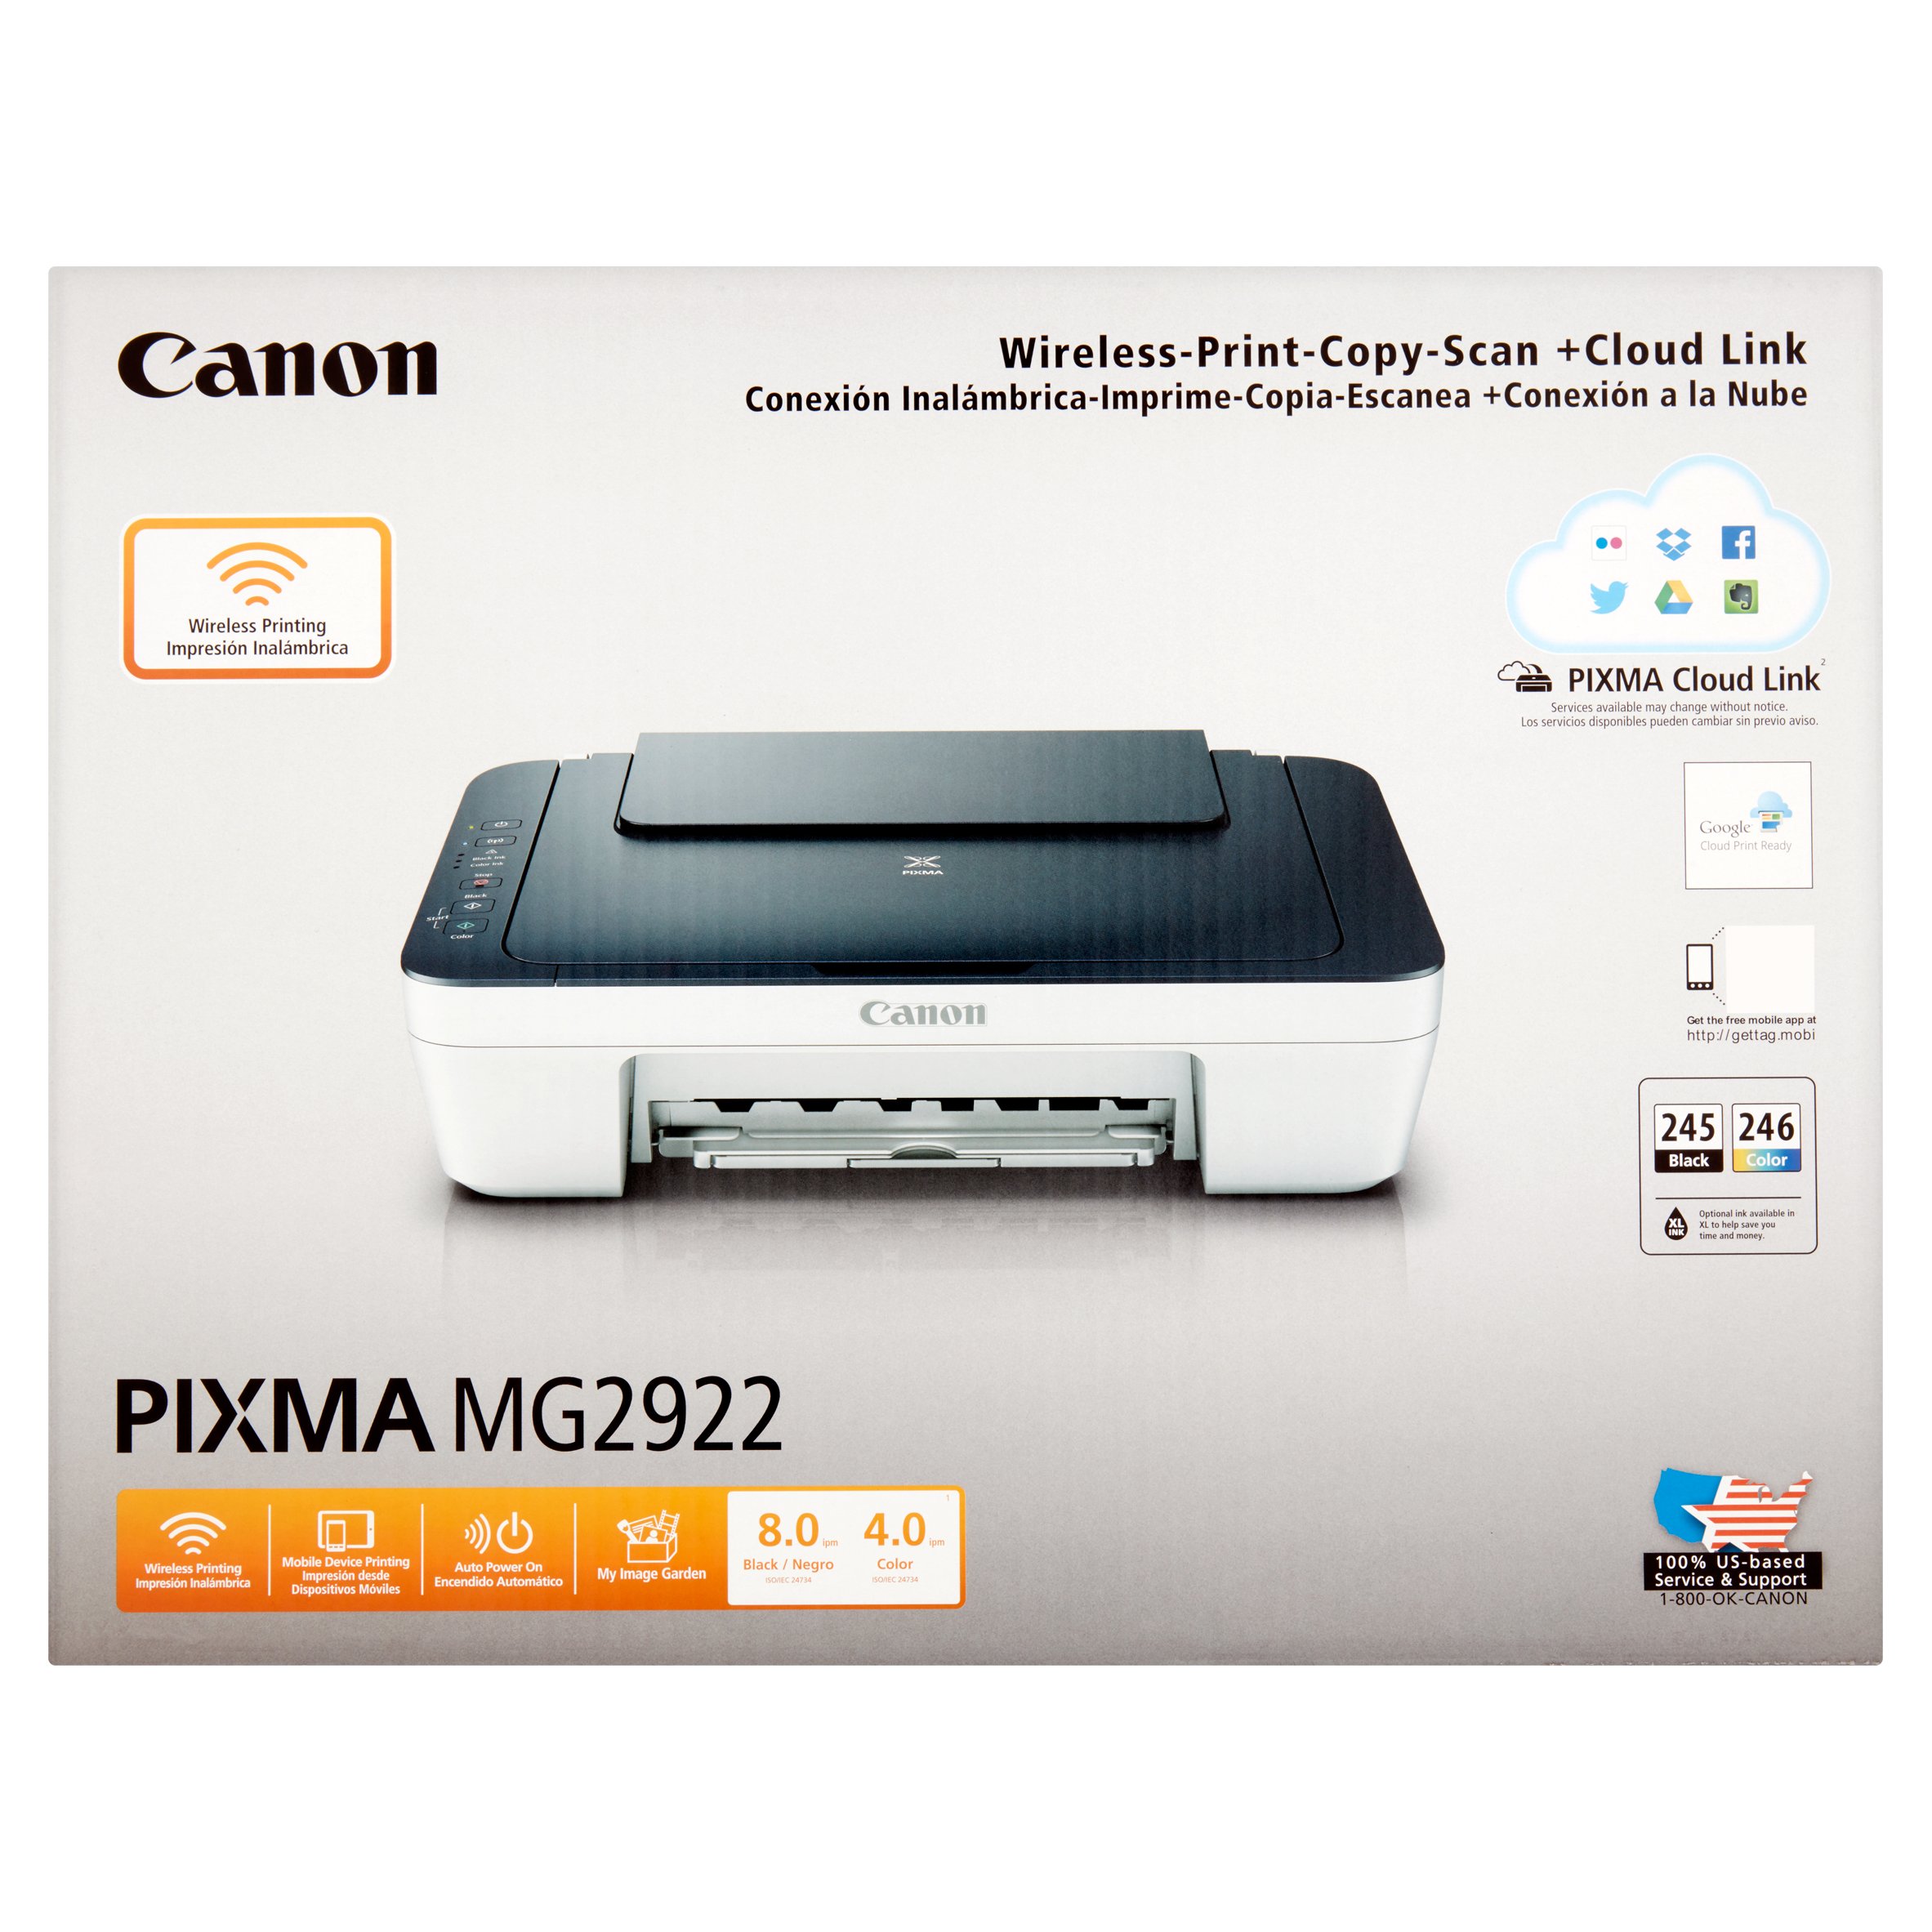 Canon PIXMA MG2922 - multifunction printer (color) - image 1 of 10